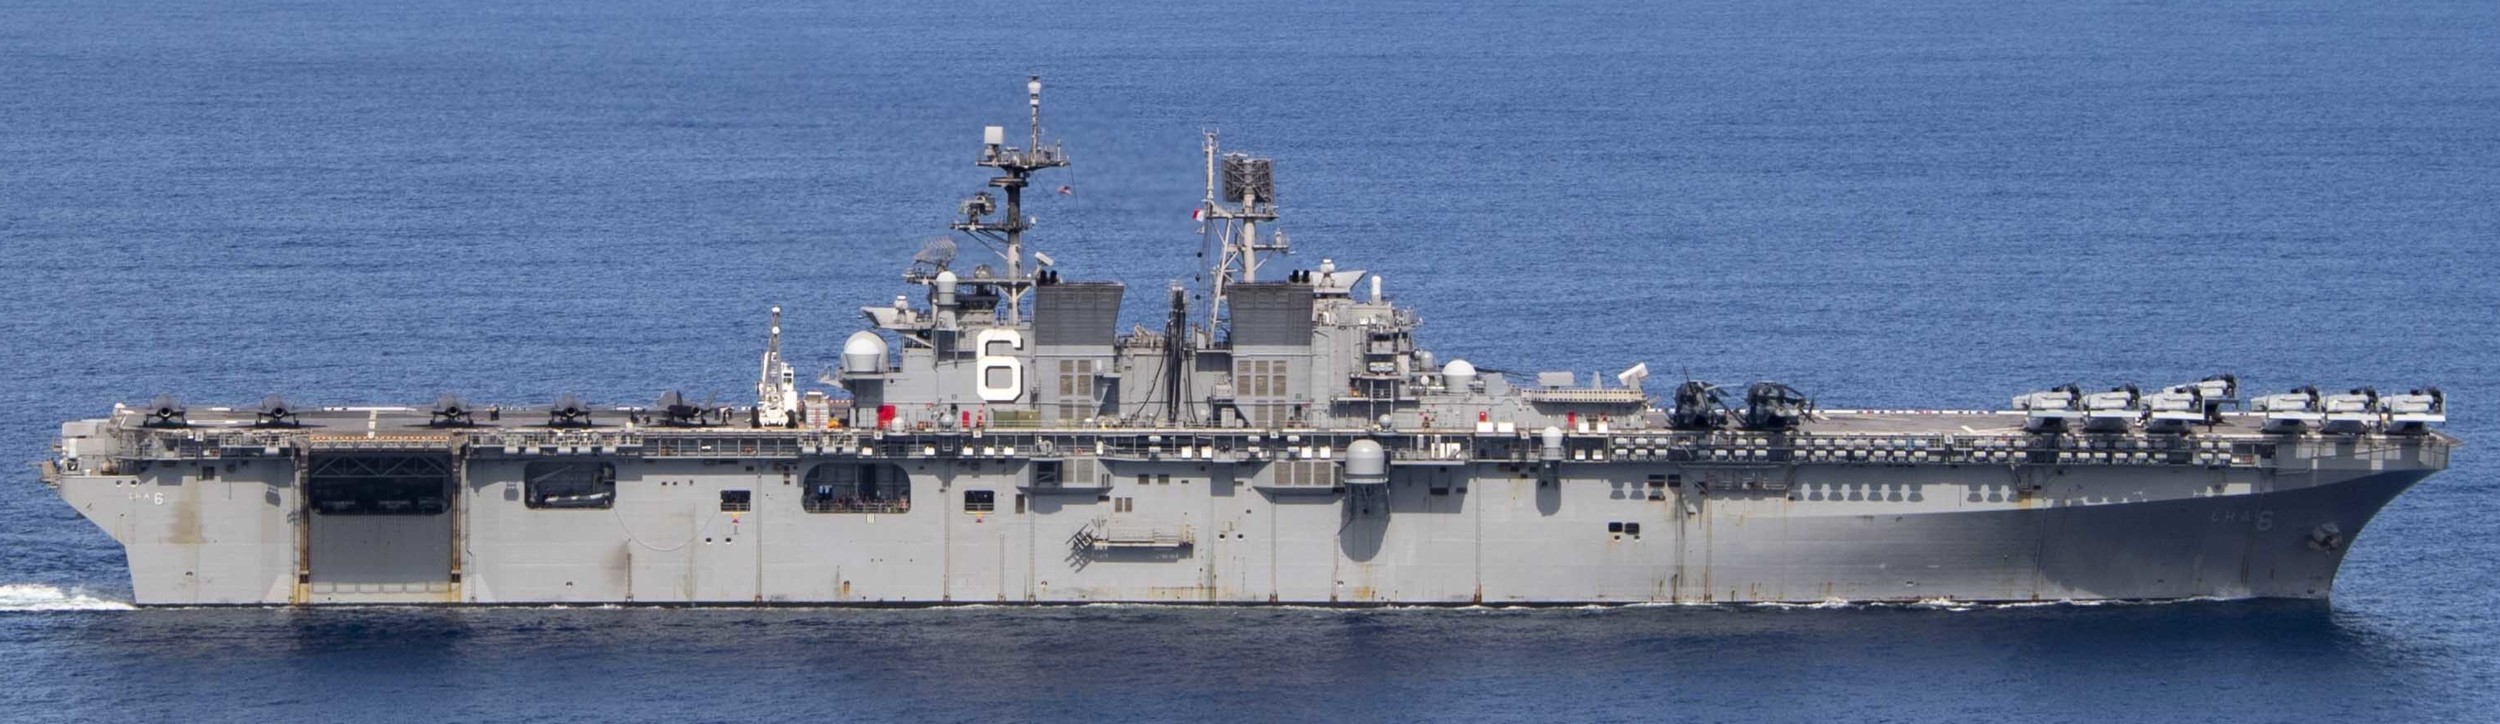 lha-6 uss america amphibious assault ship landing us navy marines vmm-265 philippine sea 195